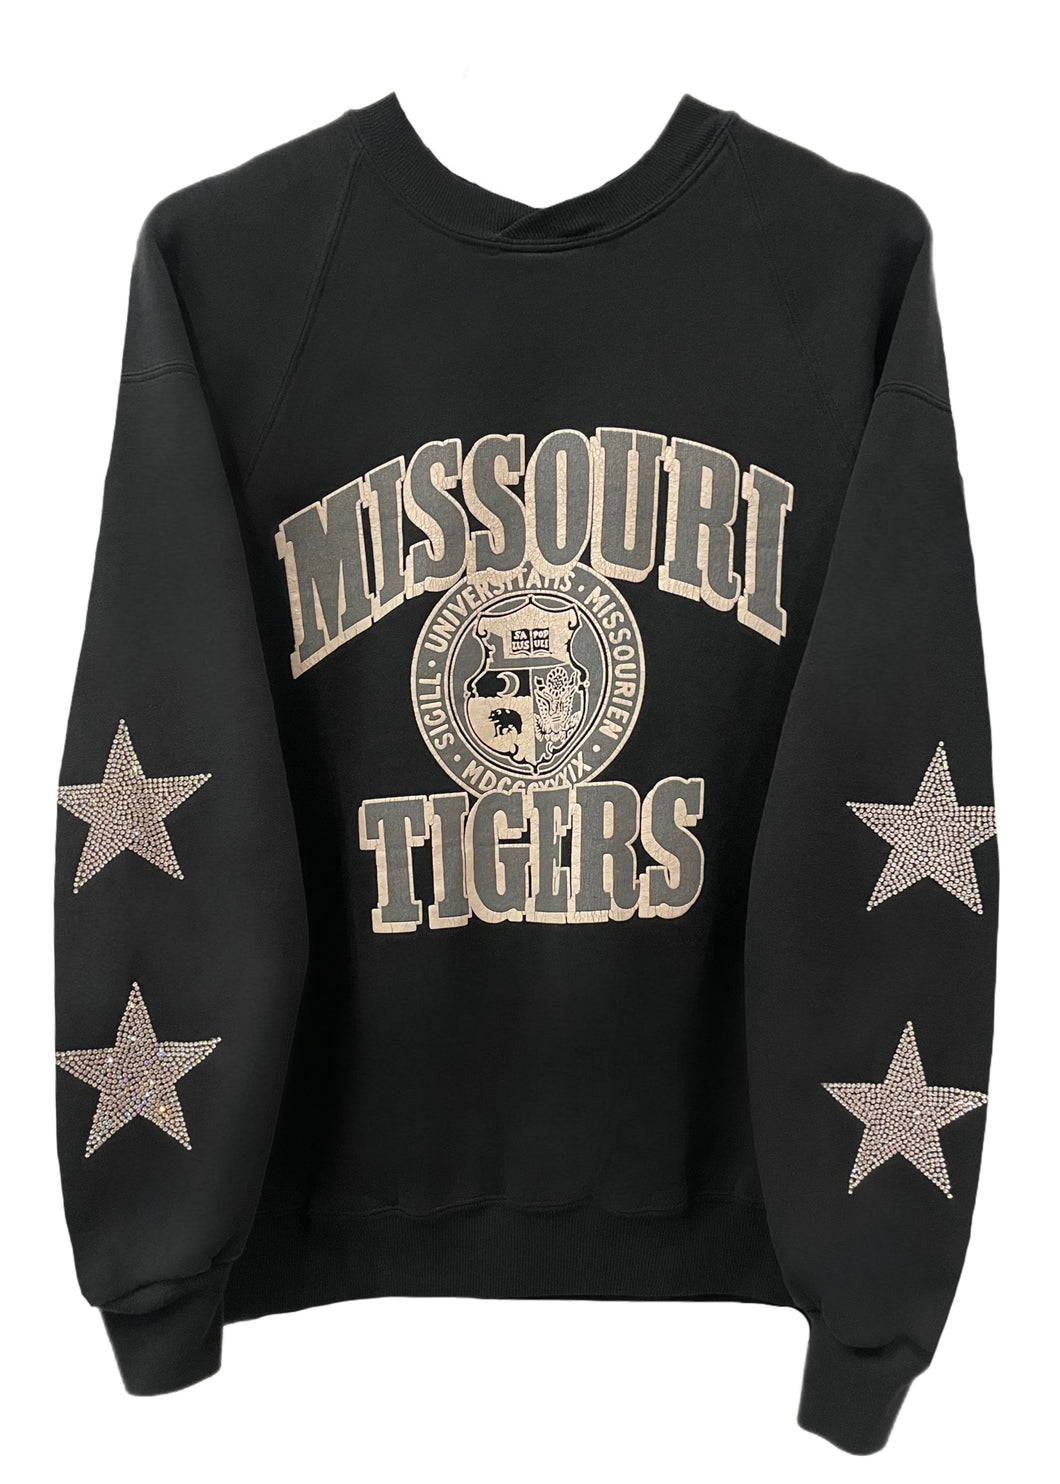 University of Missouri, Tigers One of a KIND Vintage Sweatshirt with Crystal Star Design